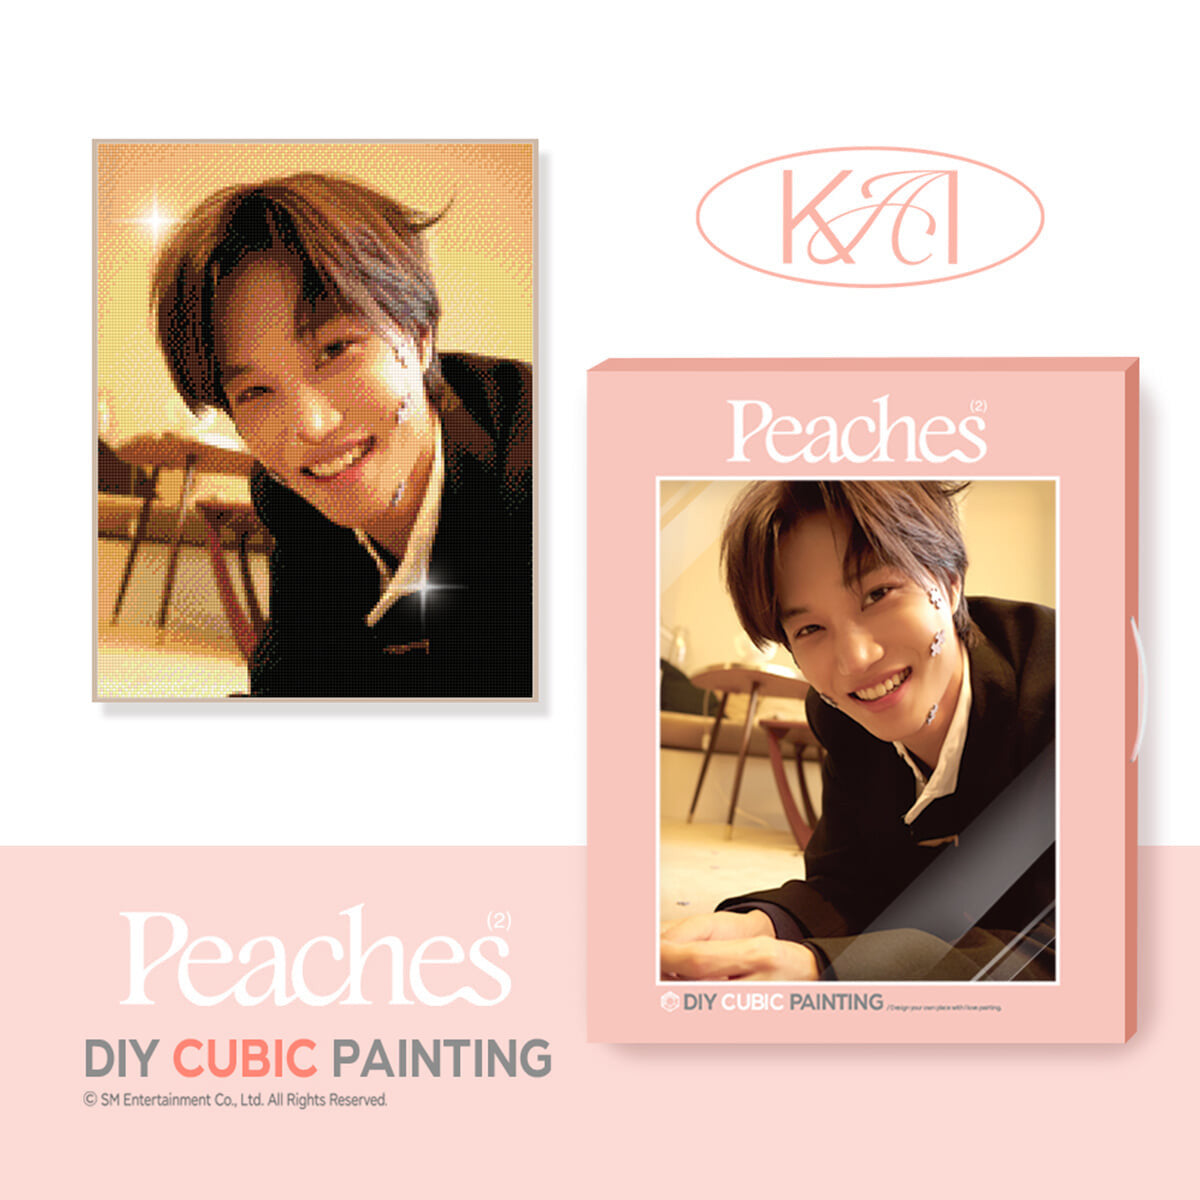 EXO KAI Peaches DIY Cubic Painting